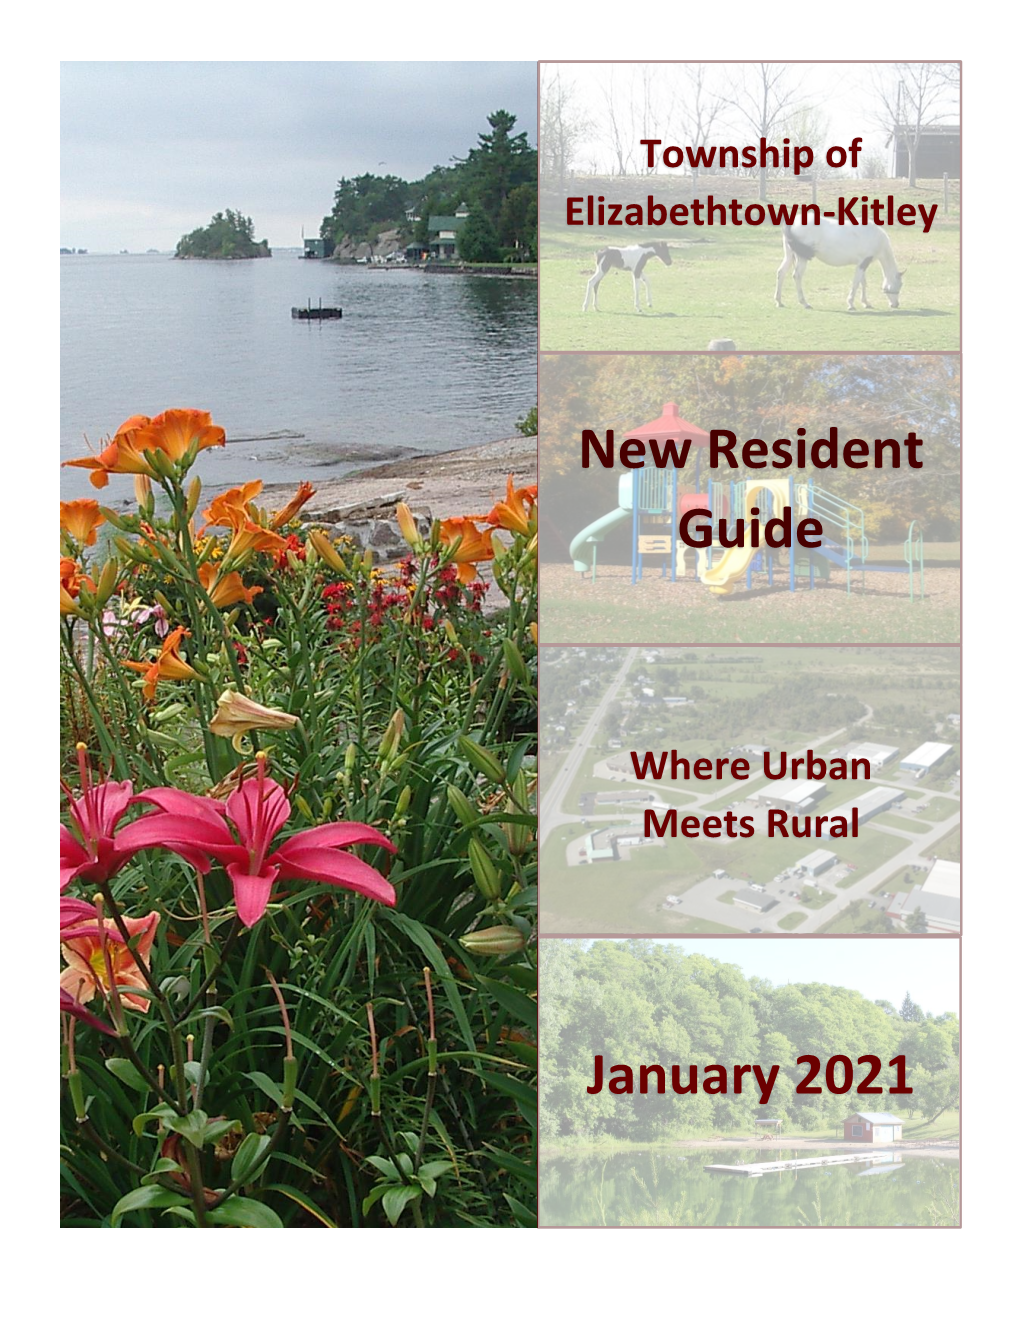 New Resident Guide January 2021